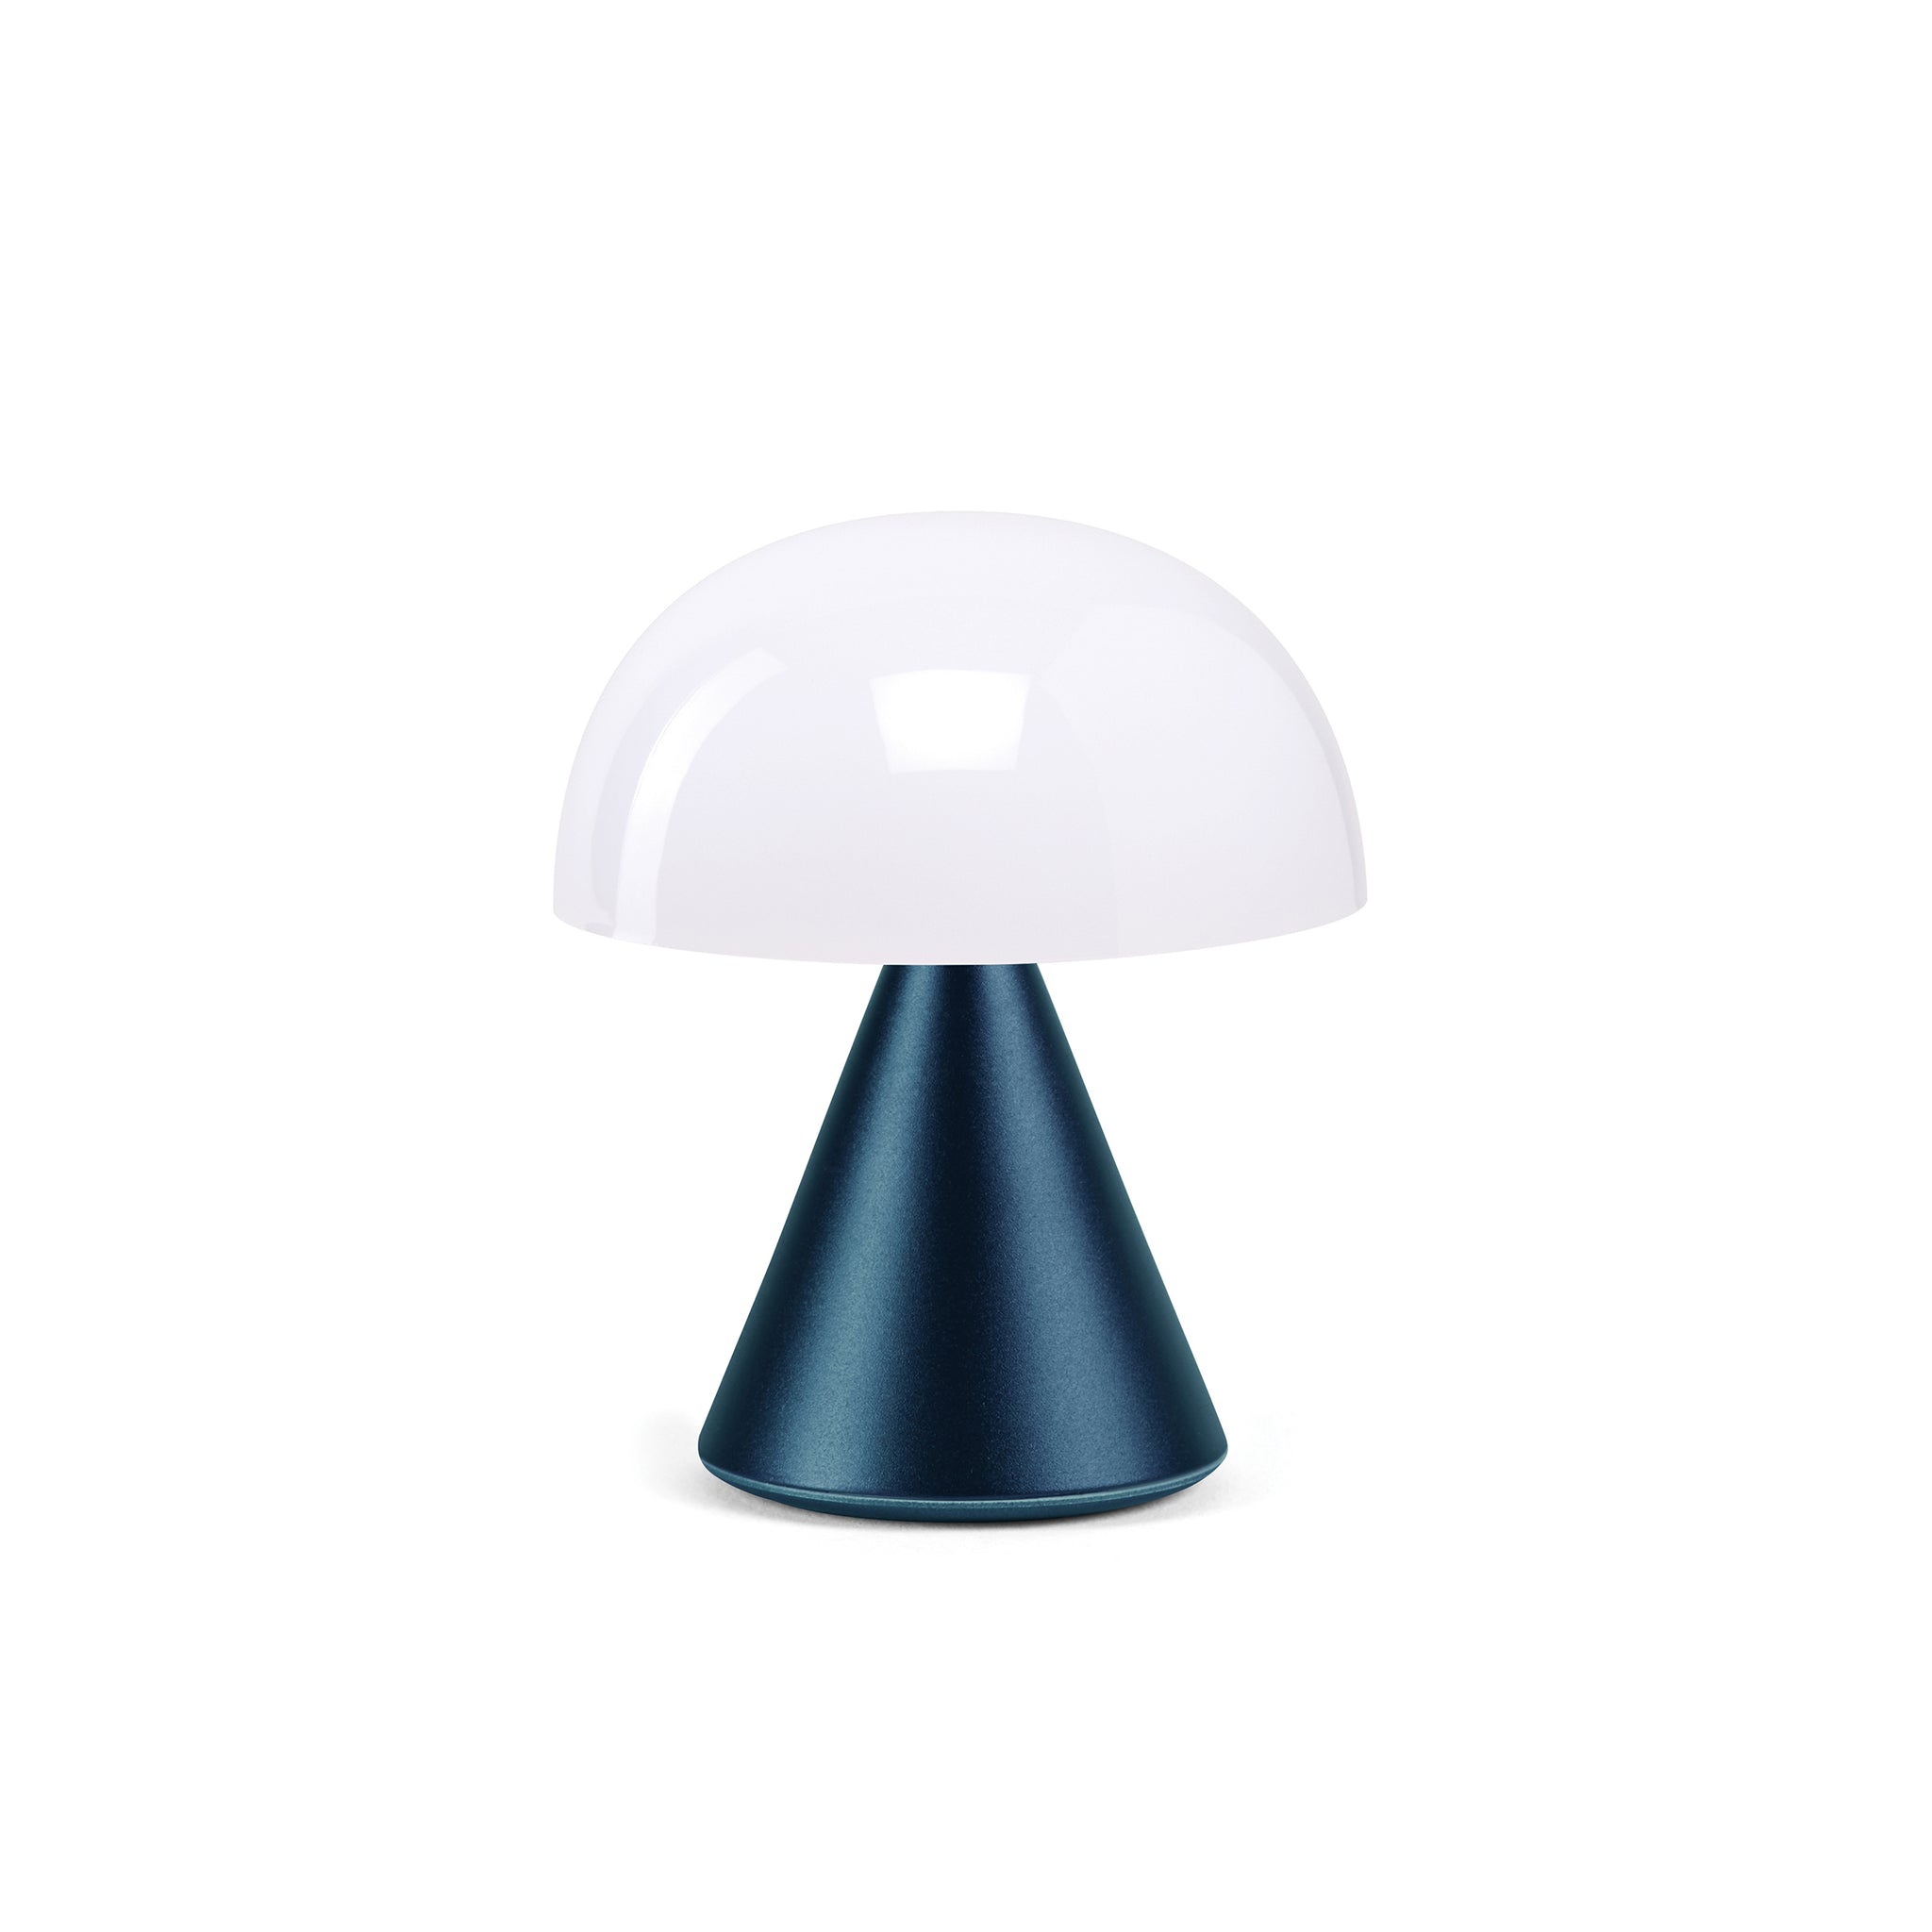 Lexon Mina Small Donkerblauw│Oplaadbare LED-Lamp│art. LH60MDB│vooraanzicht met licht uit